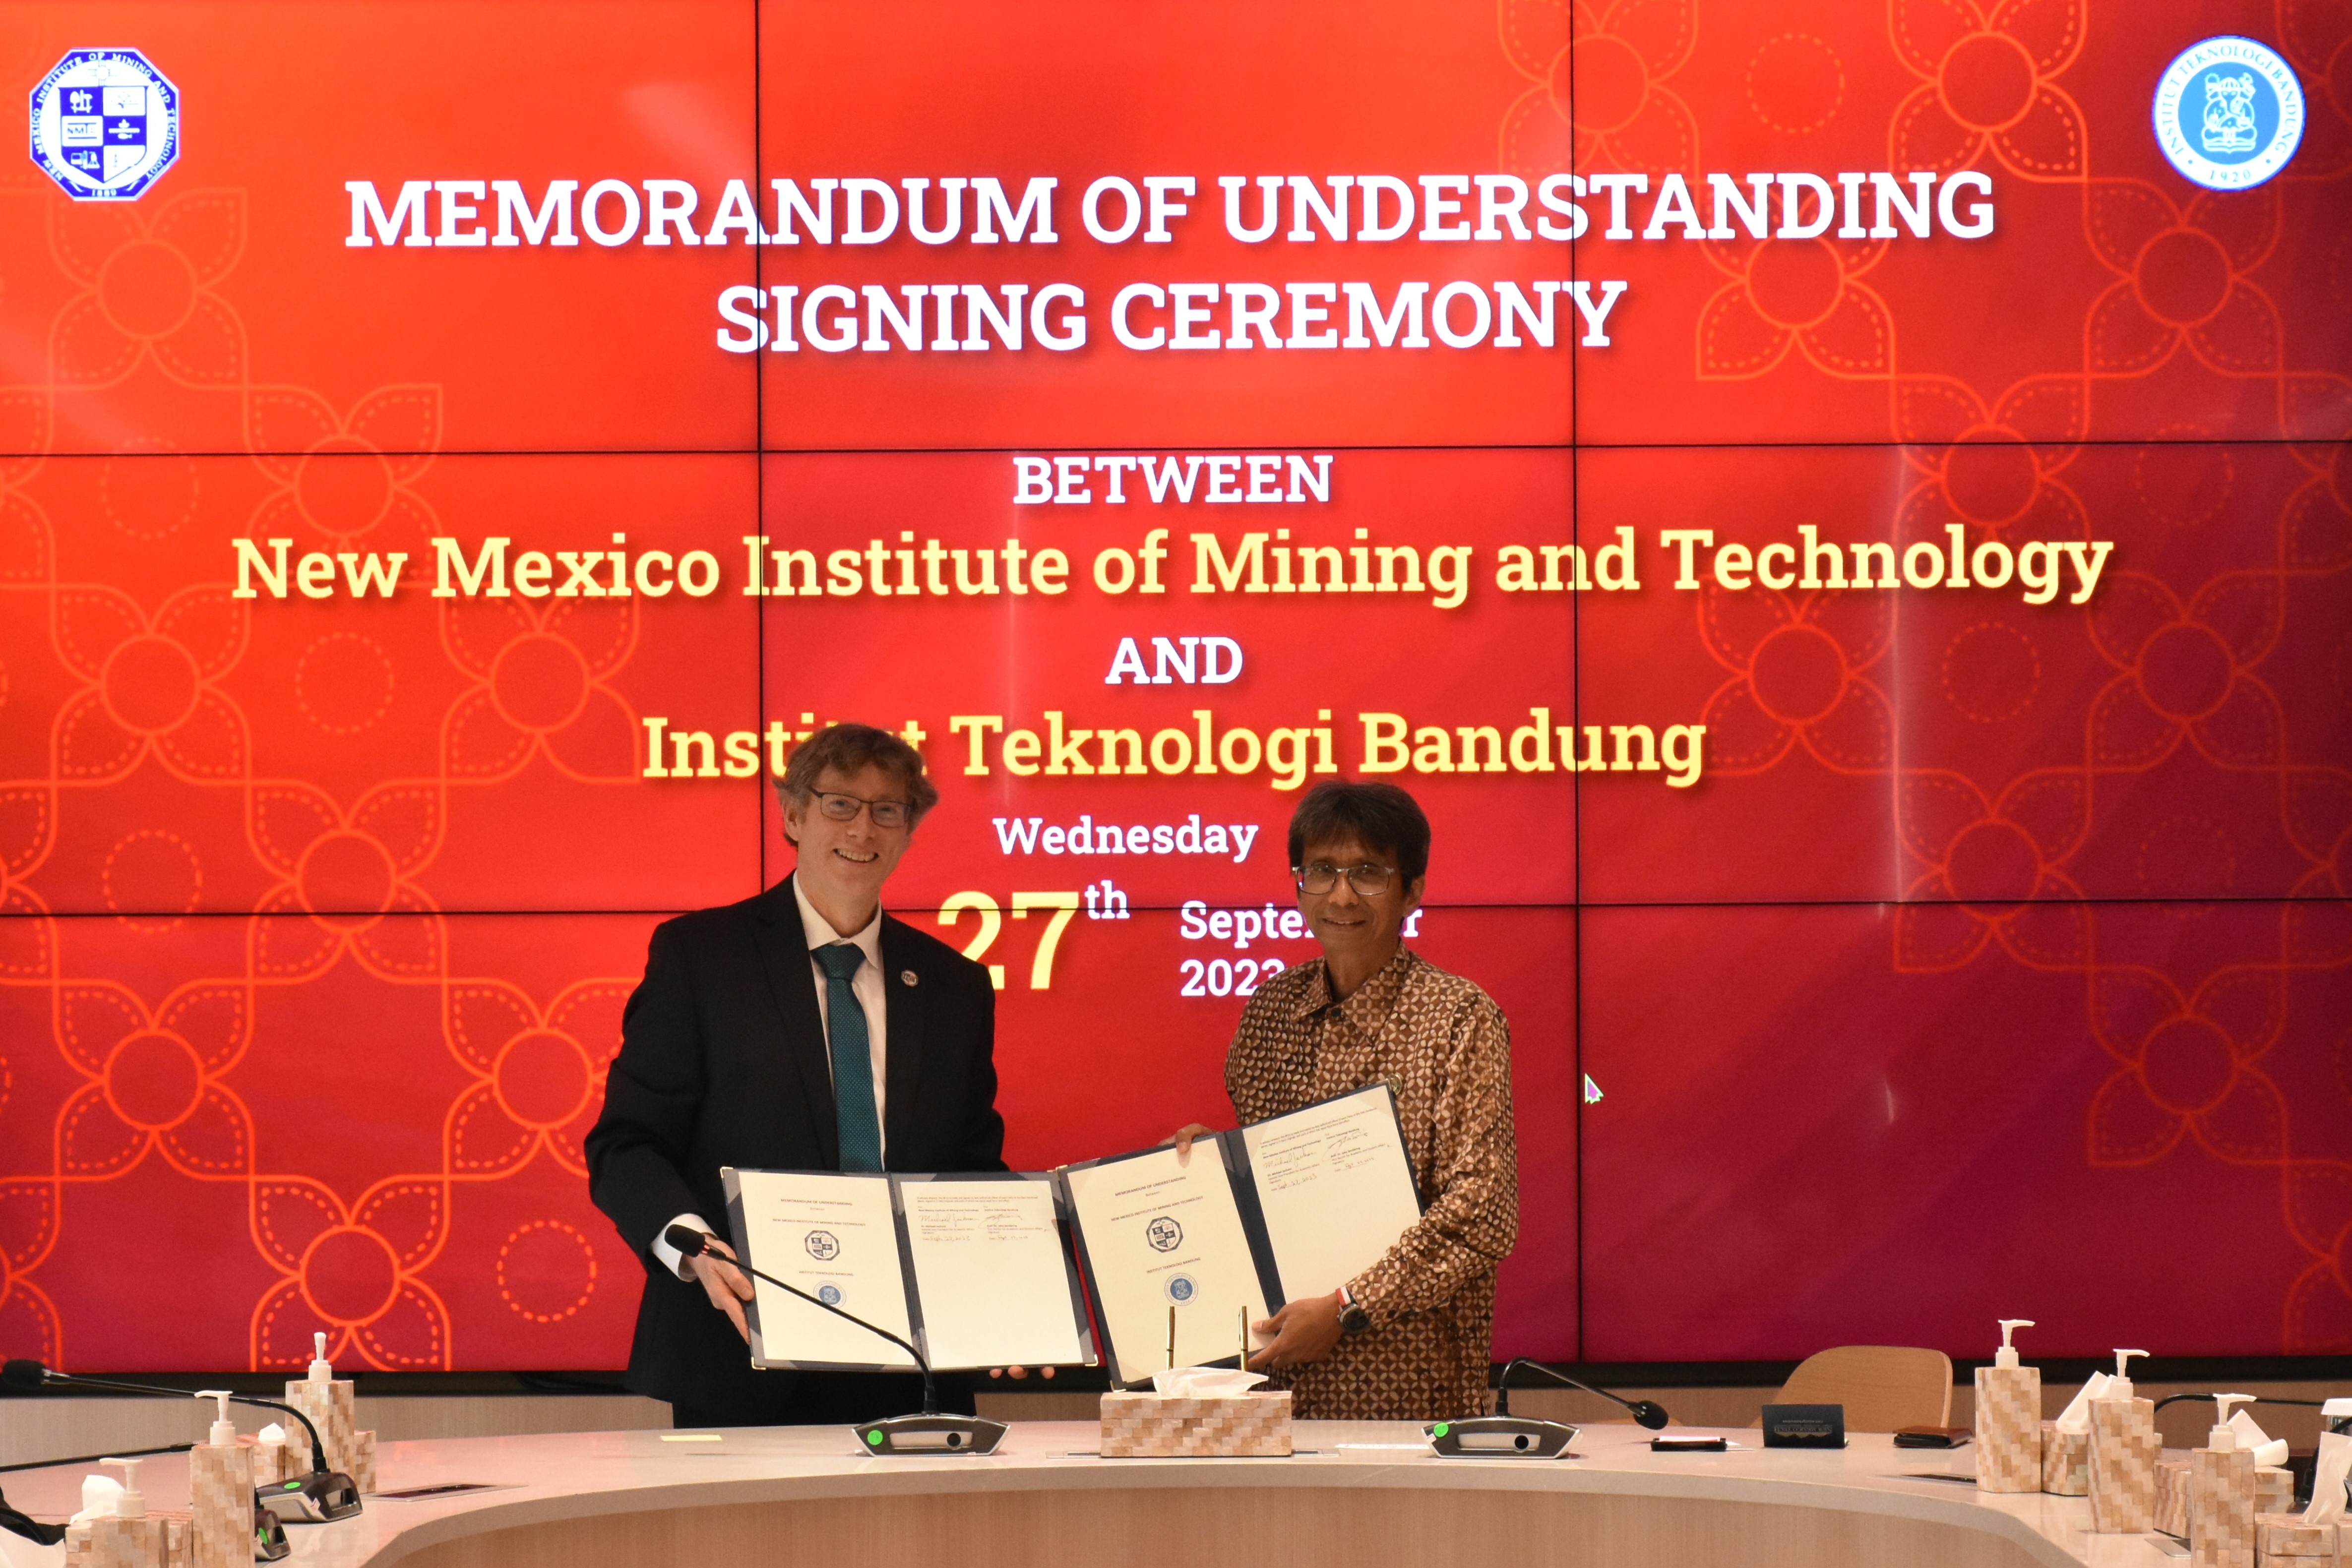 itb-dan-new-mexico-institute-of-mining-and-technology-jalin-kerja-sama-kedua-kalinya-di-bidang-pendidikan-dan-penelitian